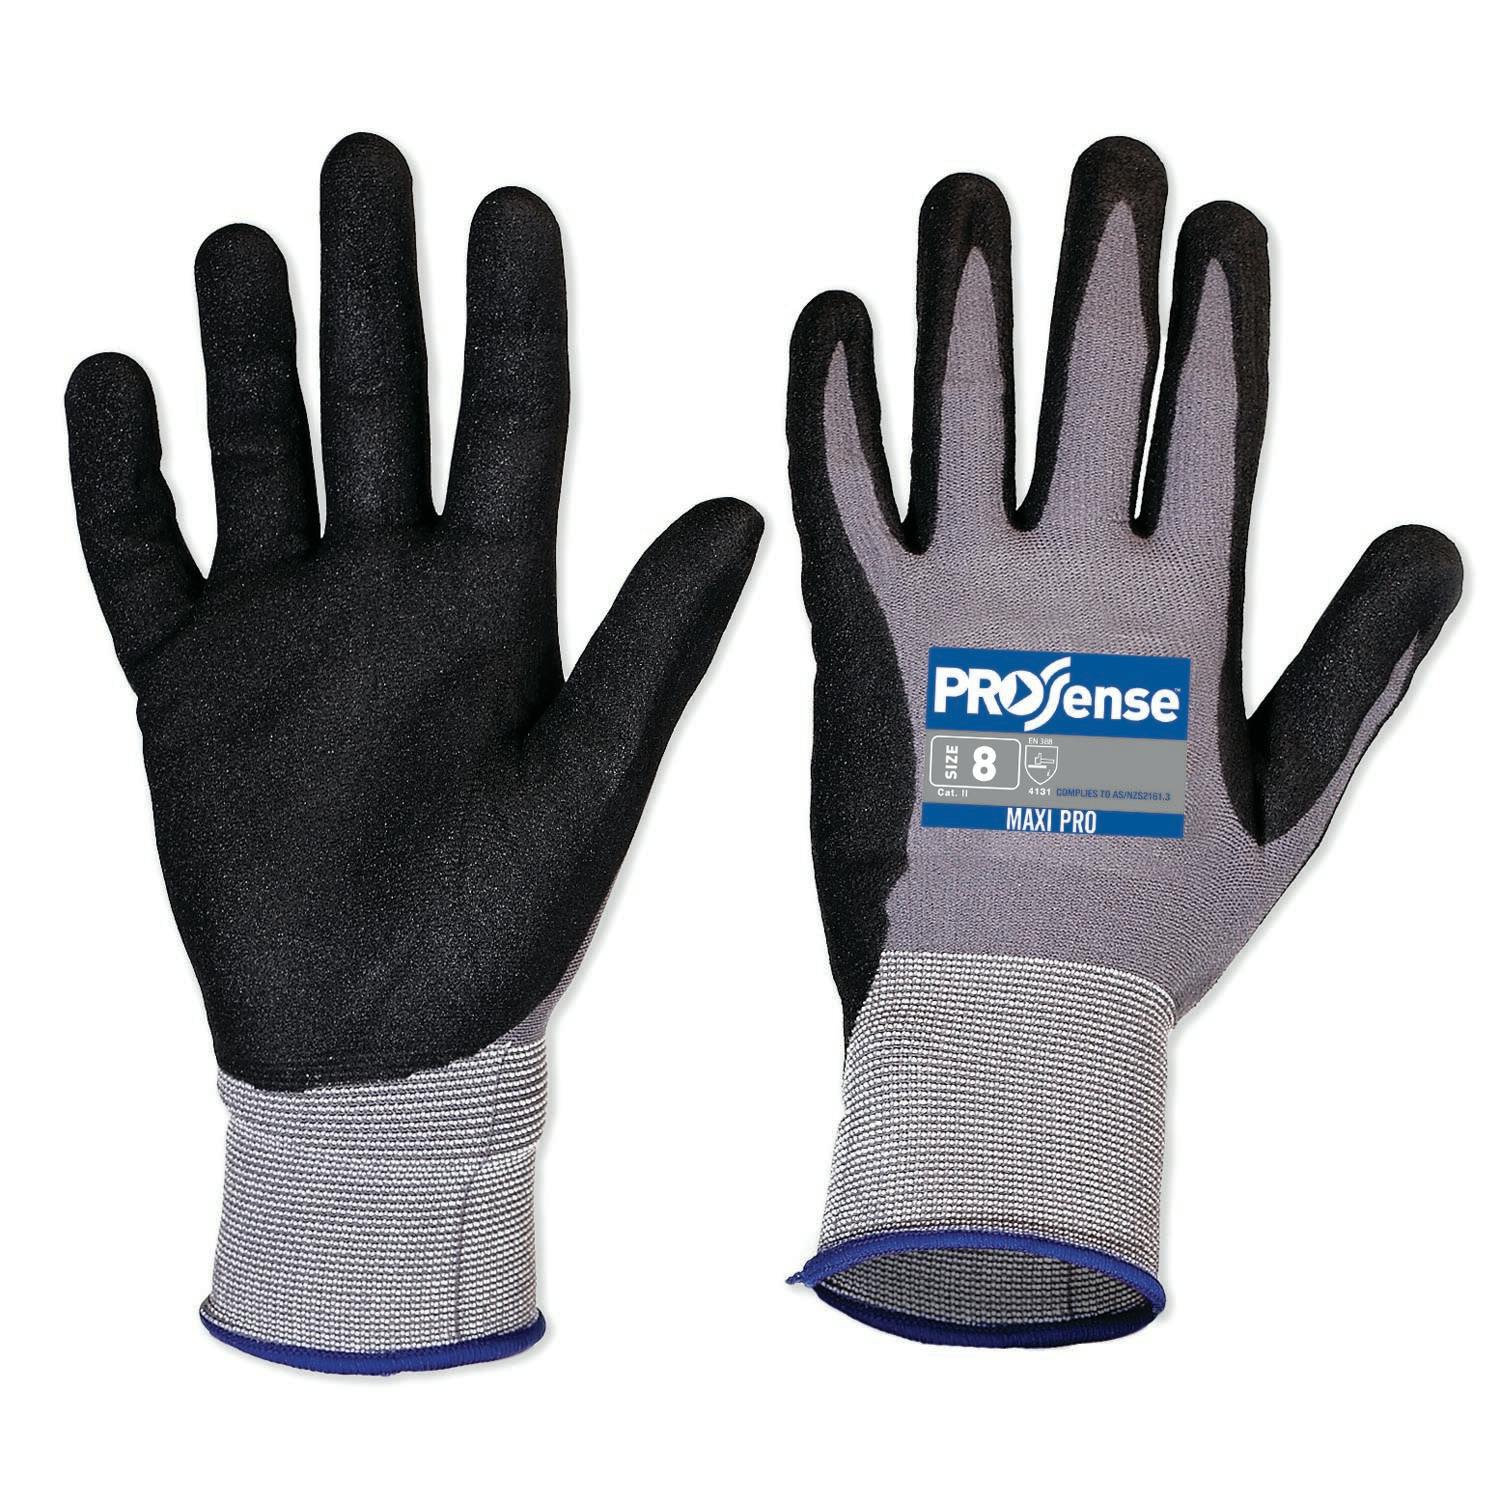 Pro Choice Prosense Maxi-Pro Gloves_0